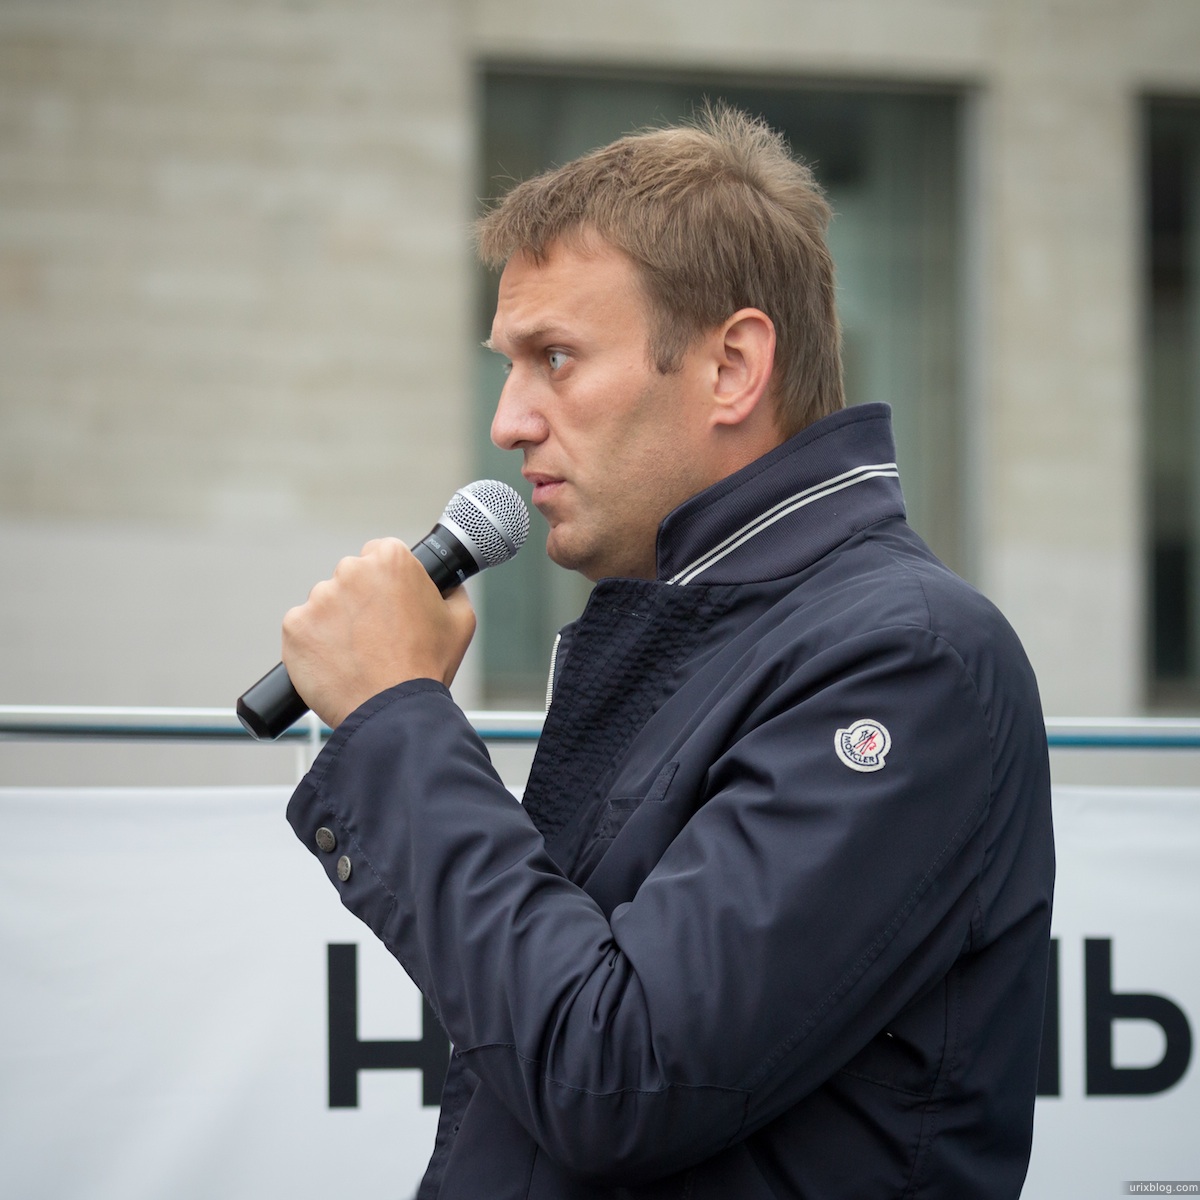 2013, Moscow, Russia, Preobrazhenskaja square, Aleksei Navalny, meeting